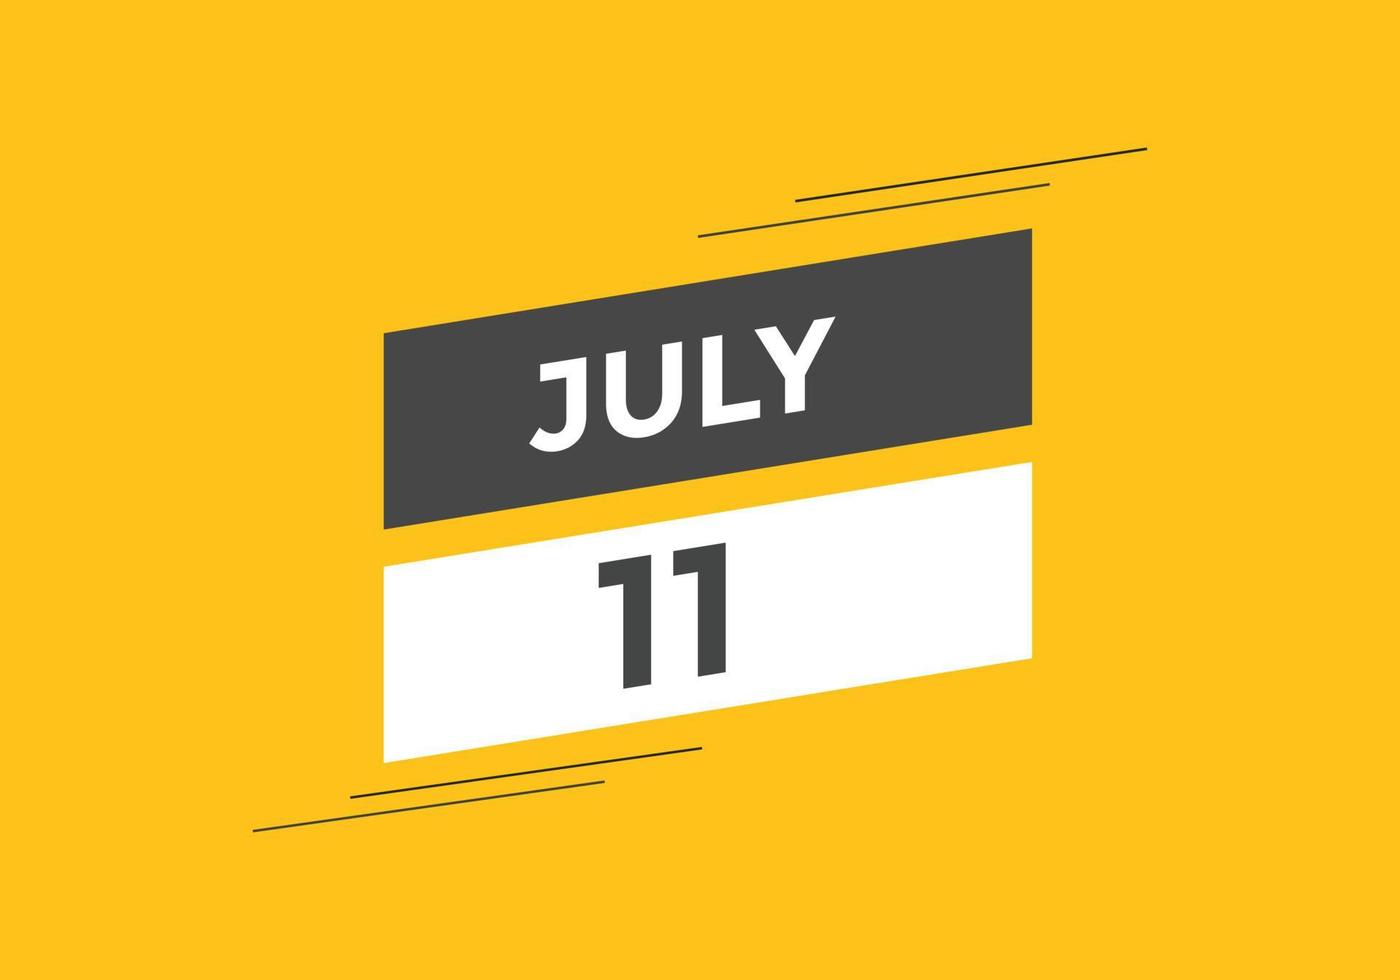 july 11 calendar reminder. 11th july daily calendar icon template. Calendar 11th july icon Design template. Vector illustration